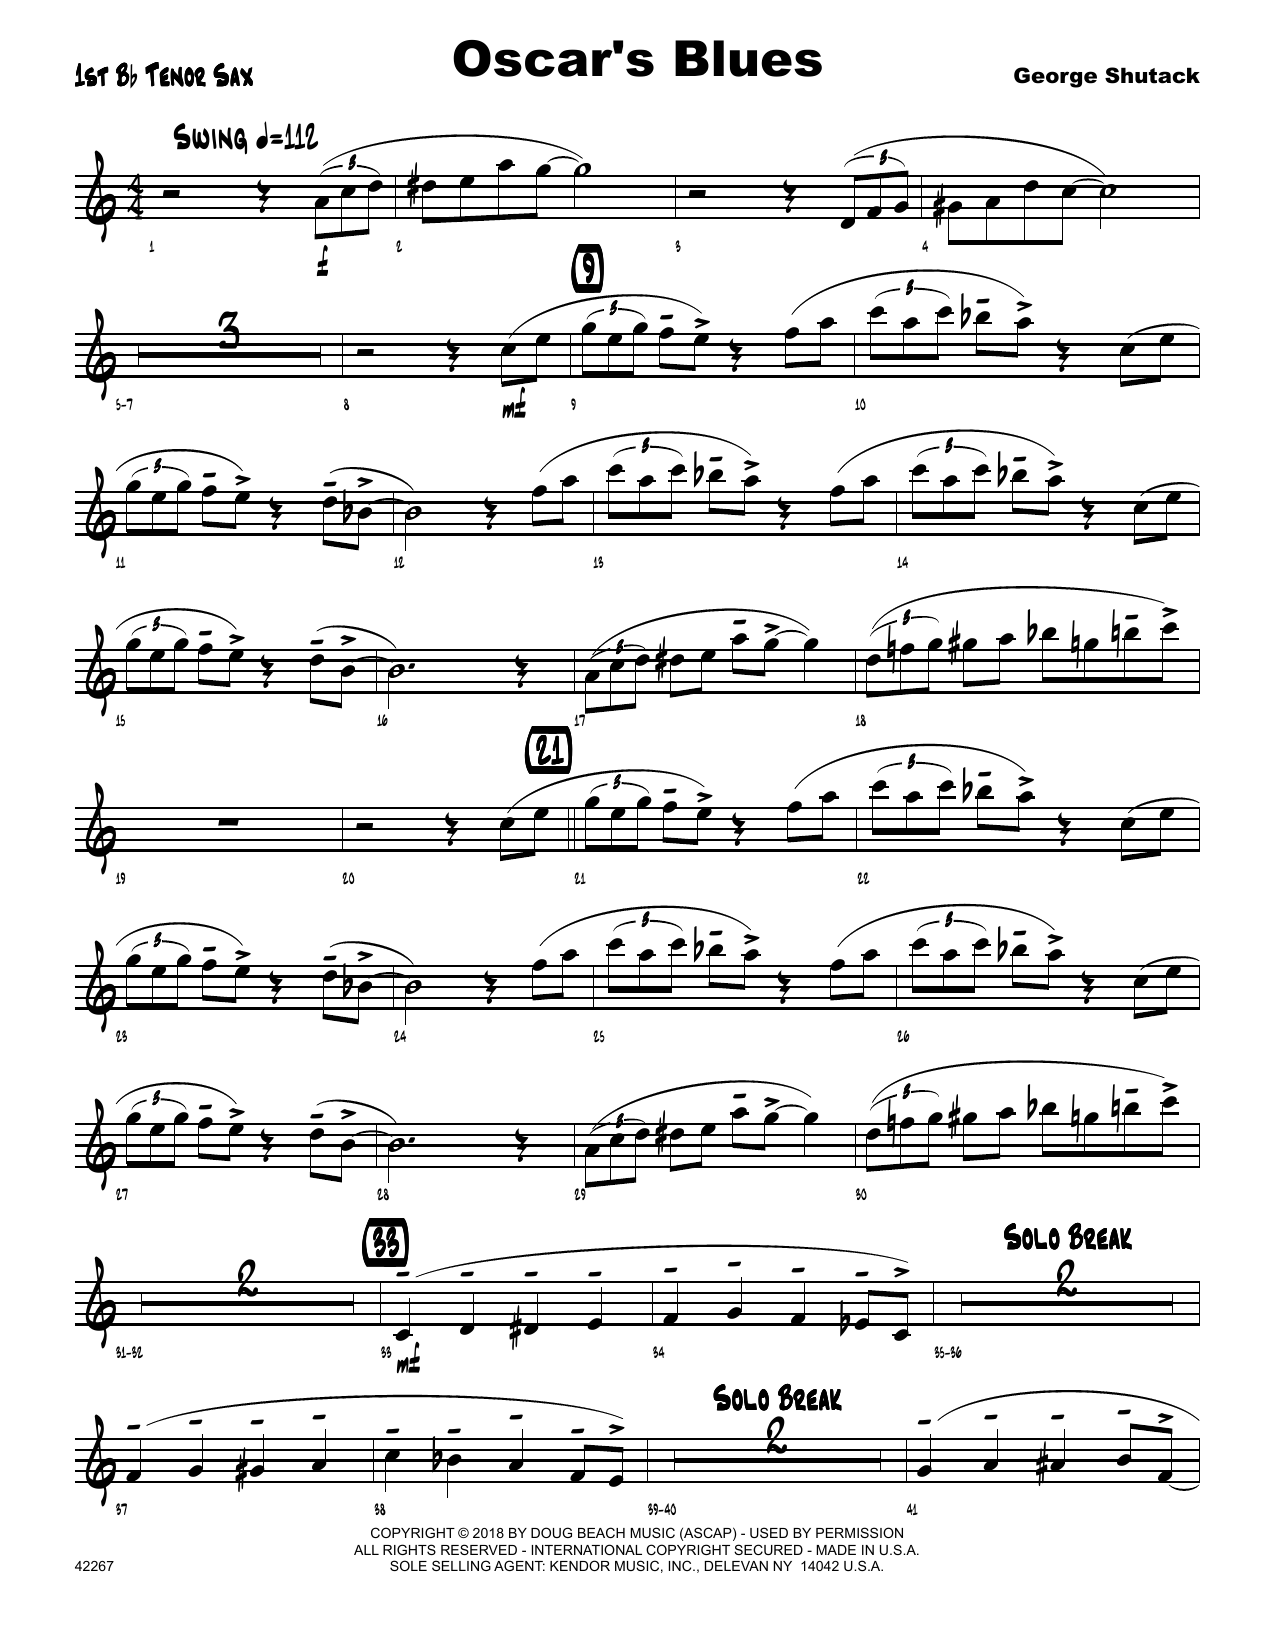 Download George Shutack Oscar's Blues - 1st Tenor Saxophone Sheet Music